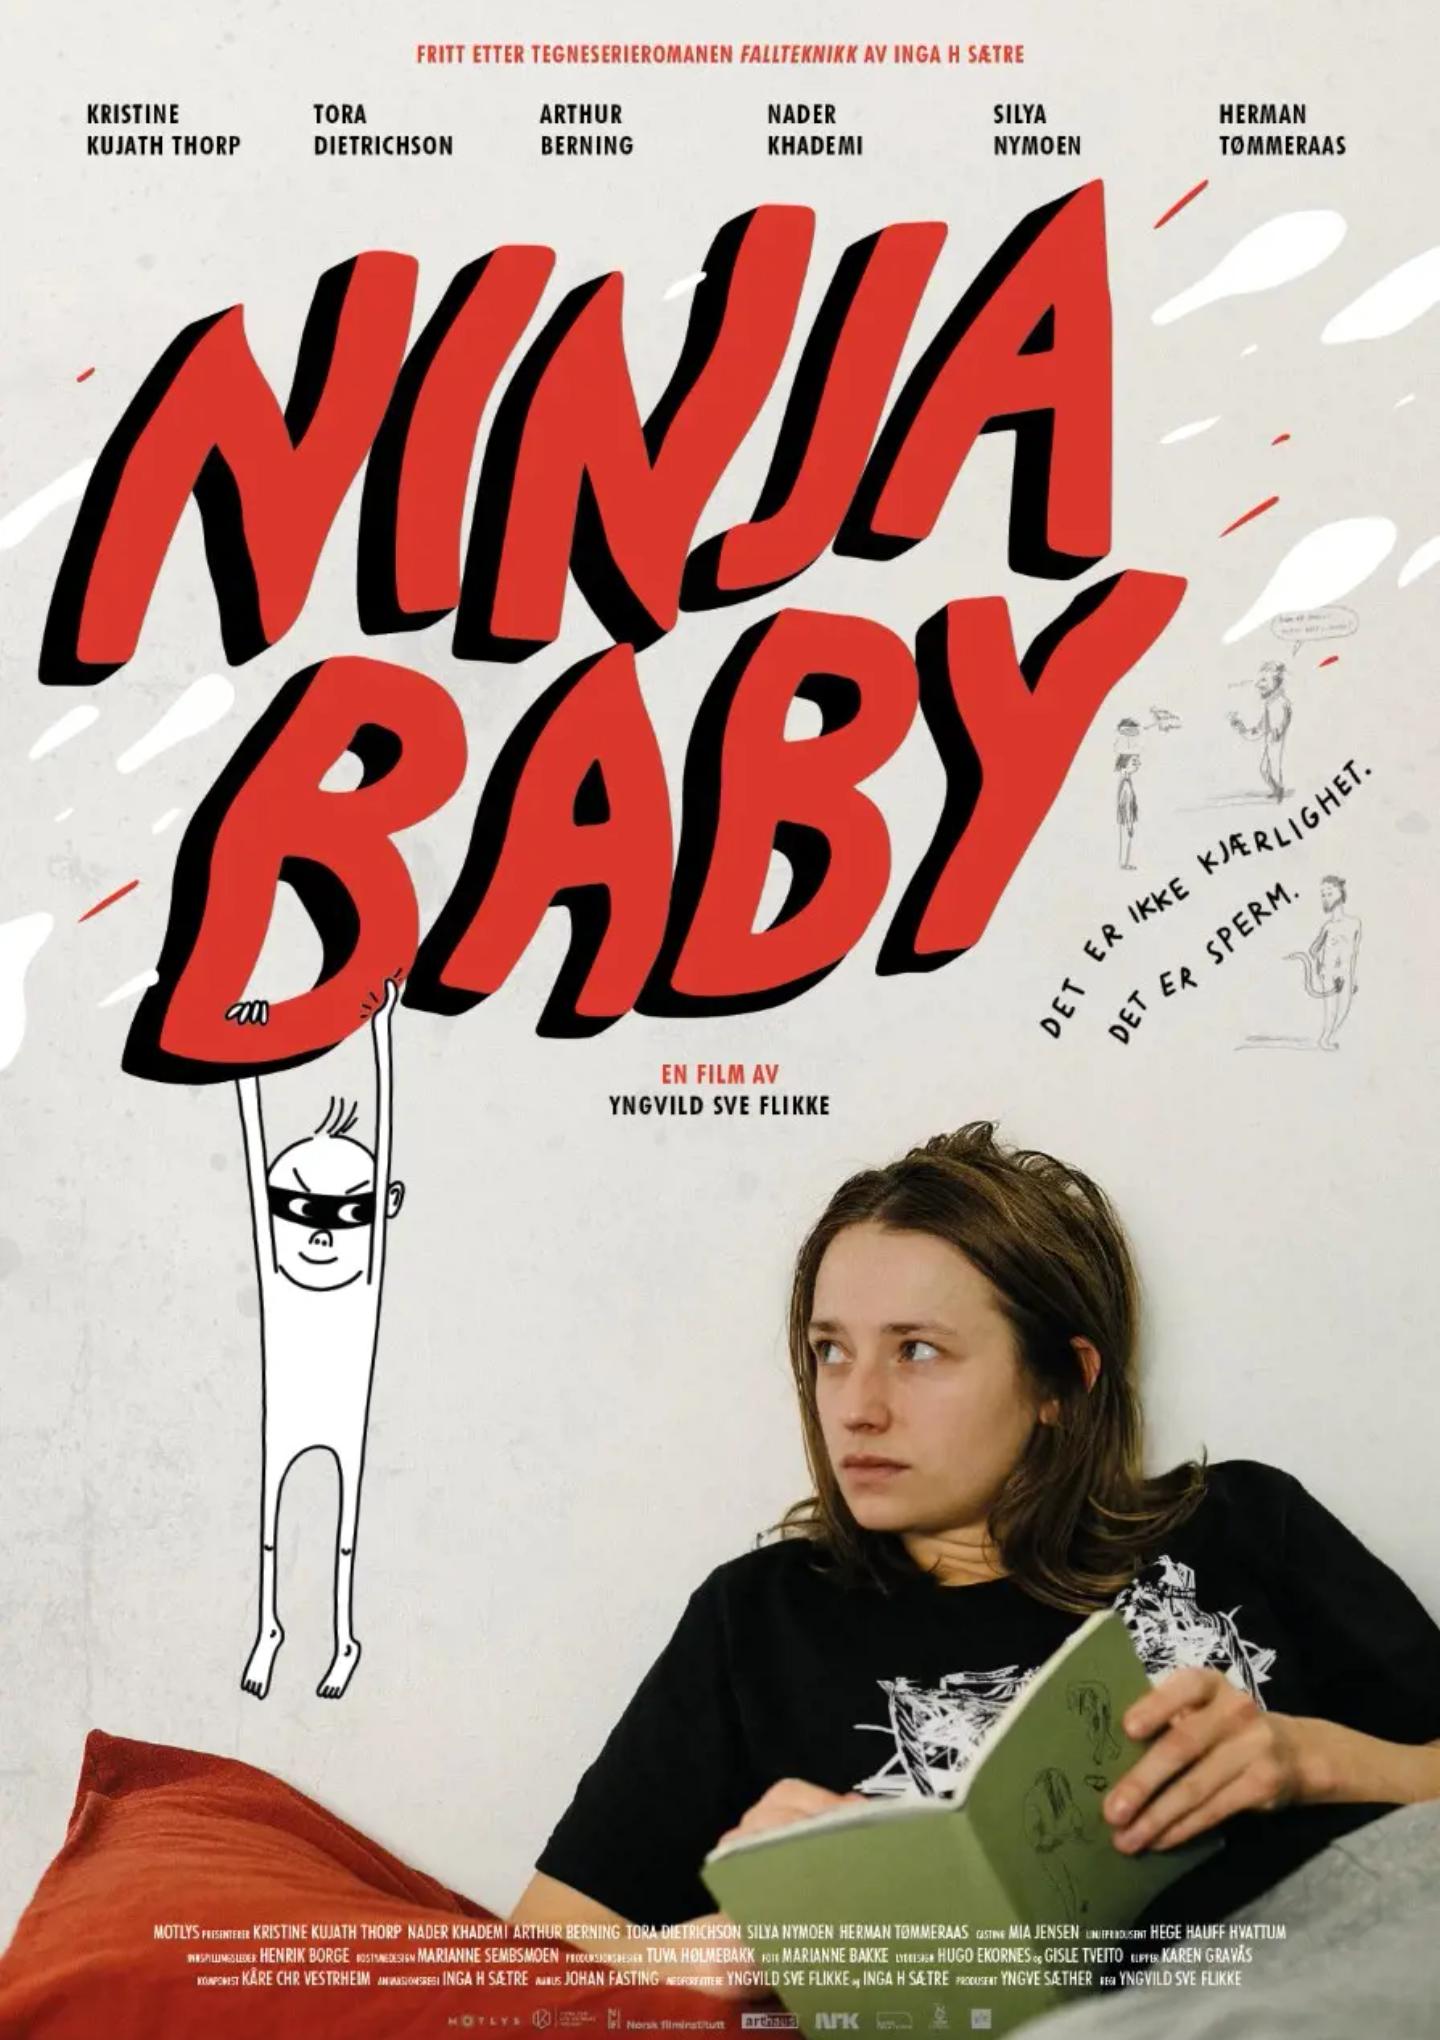 Plakat for 'Ninjababy'